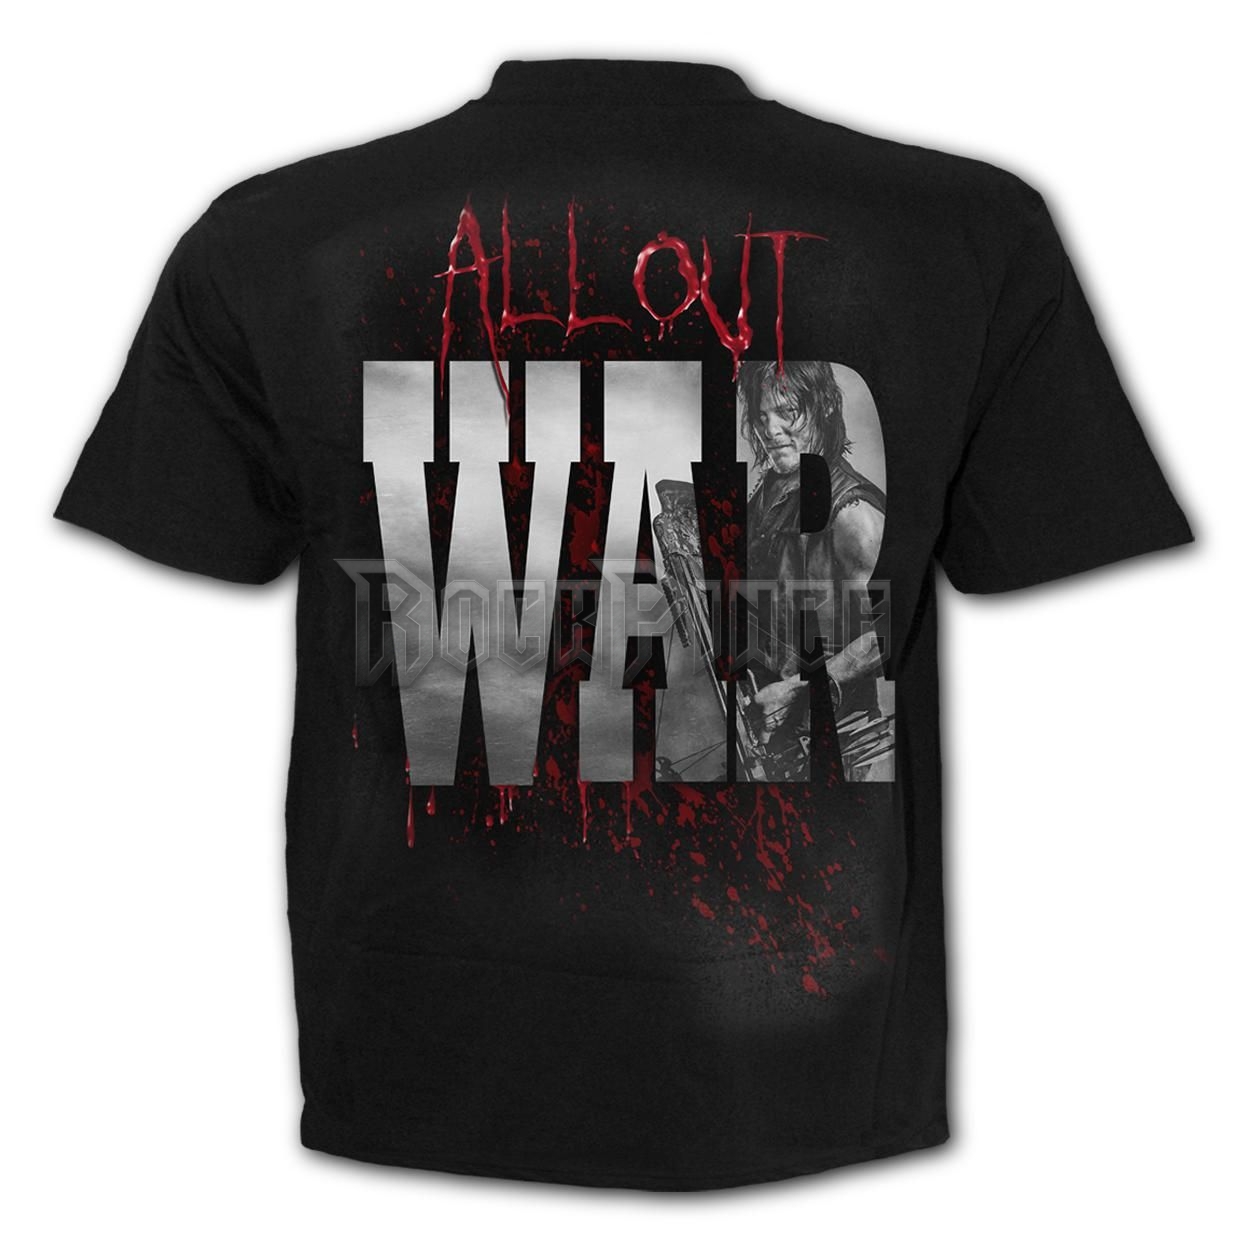 The Walking Dead - ALL OUT WAR - T-Shirt Black - G010M101